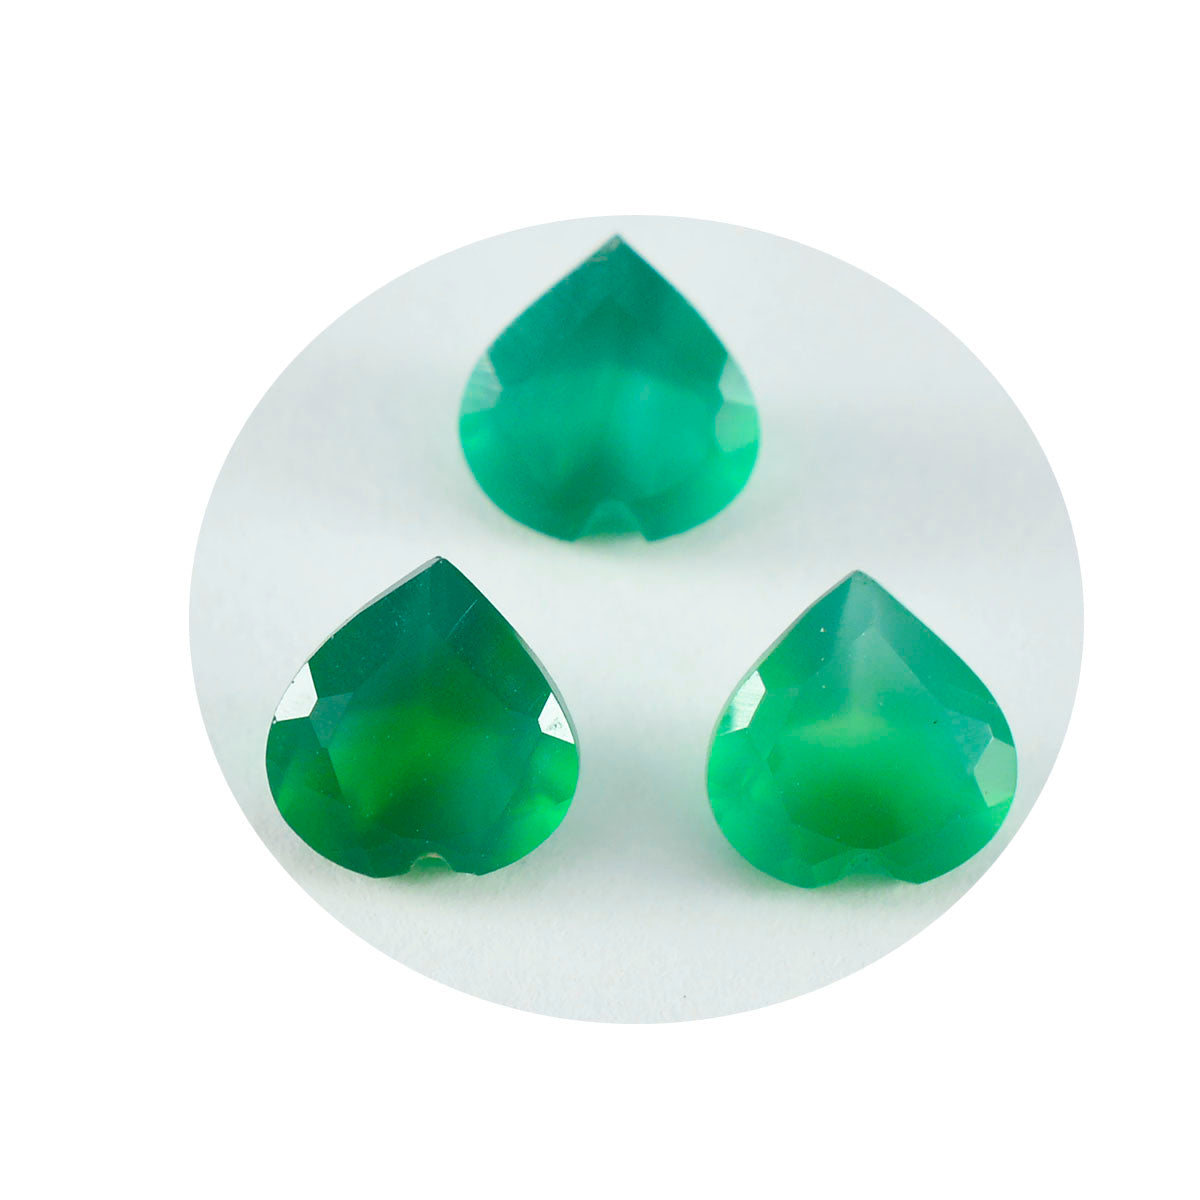 Riyogems 1PC echte groene onyx gefacetteerde 7x7 mm hartvorm knappe kwaliteitsedelstenen